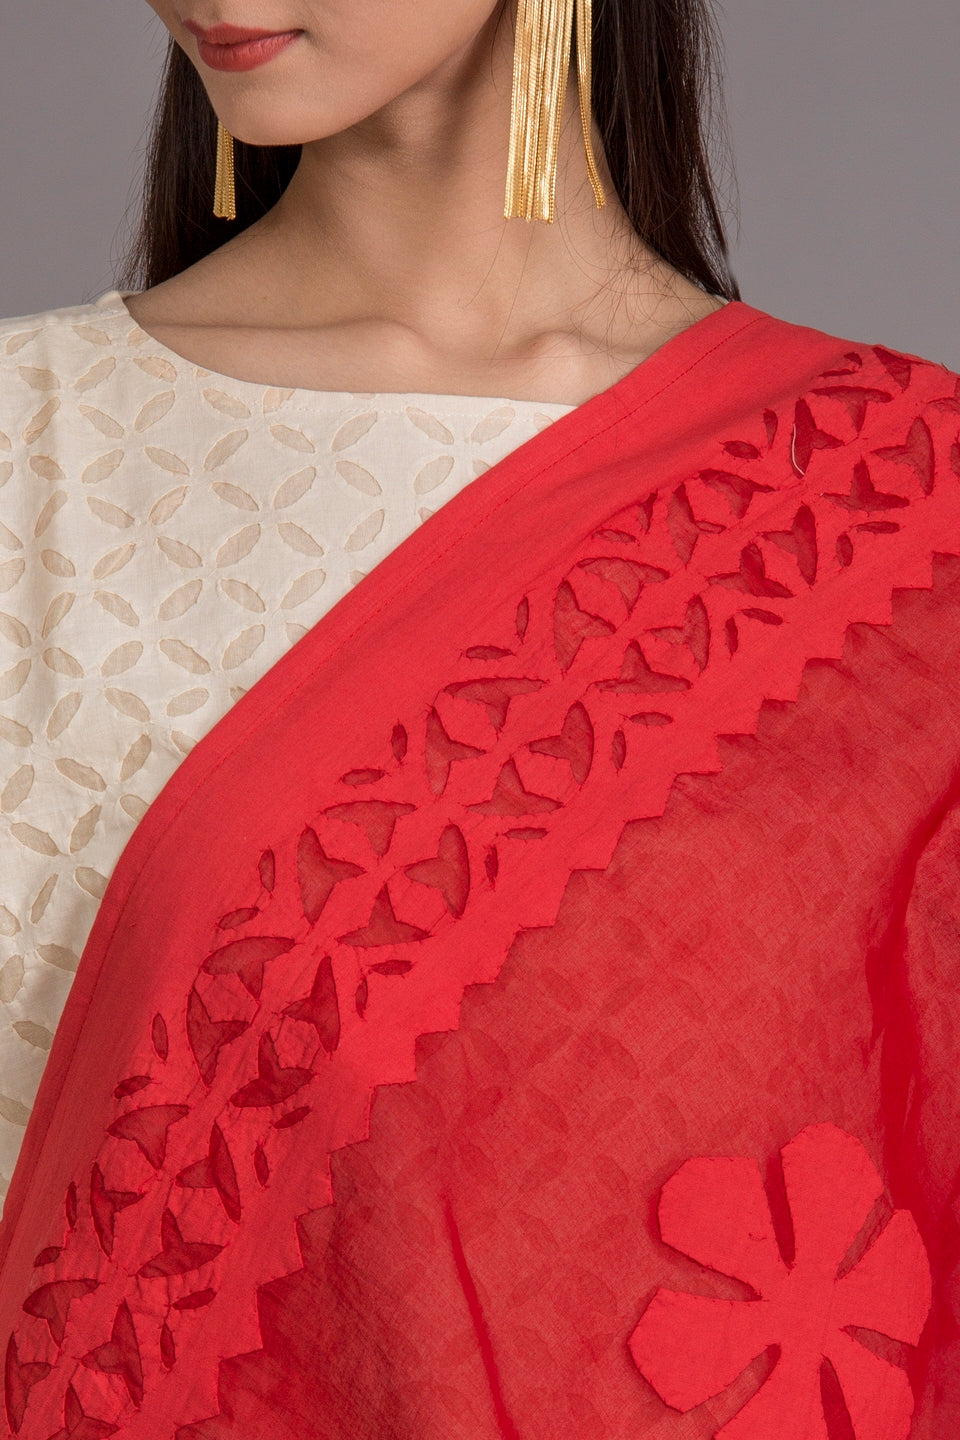 Duppatta Floral Applique Cotton with Ball Design Border, Red